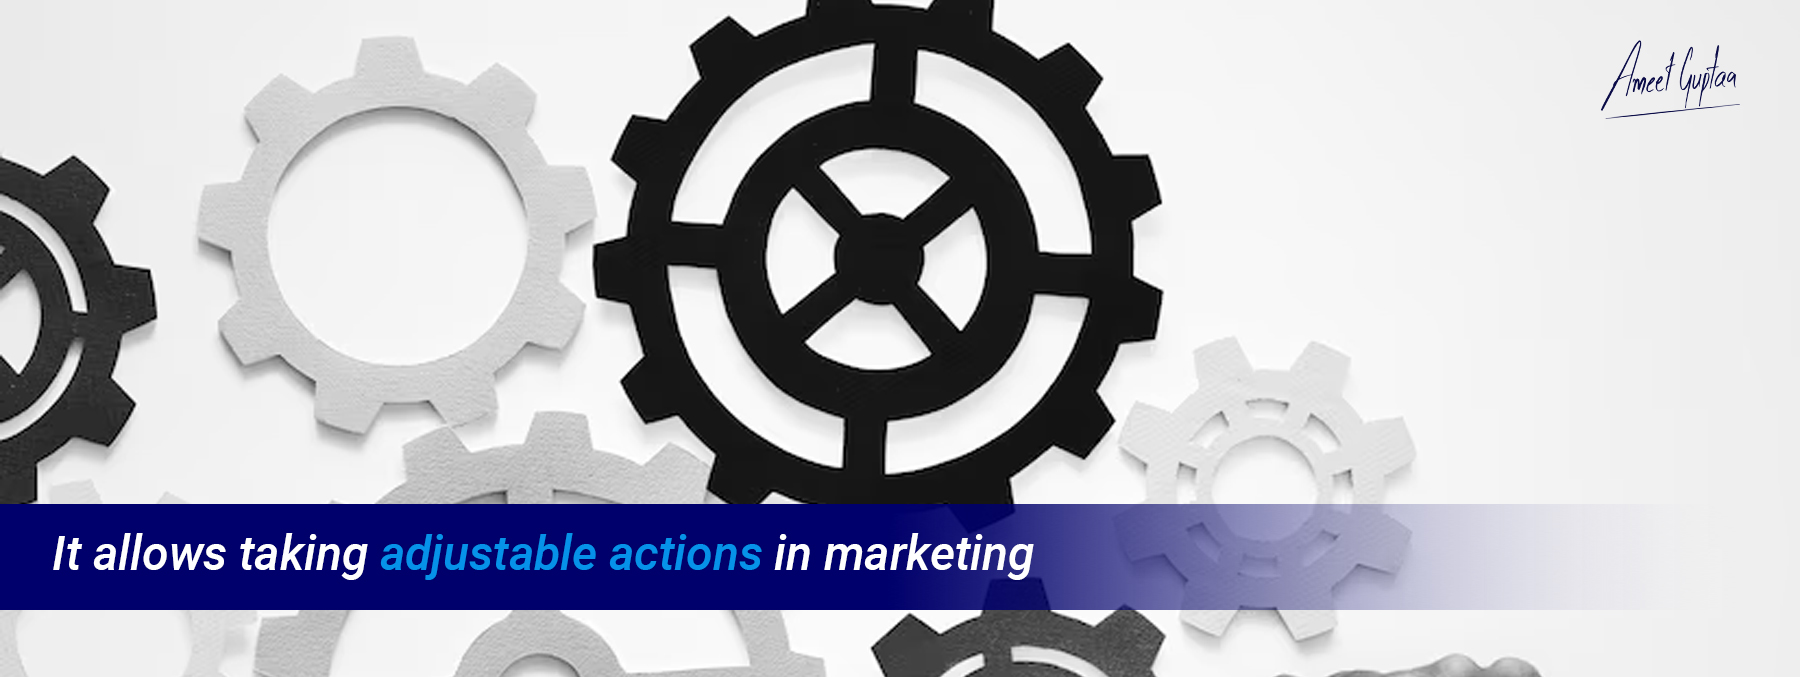 It-allows-taking-adjustable-actions-in-marketing-Ameet-Guptaa